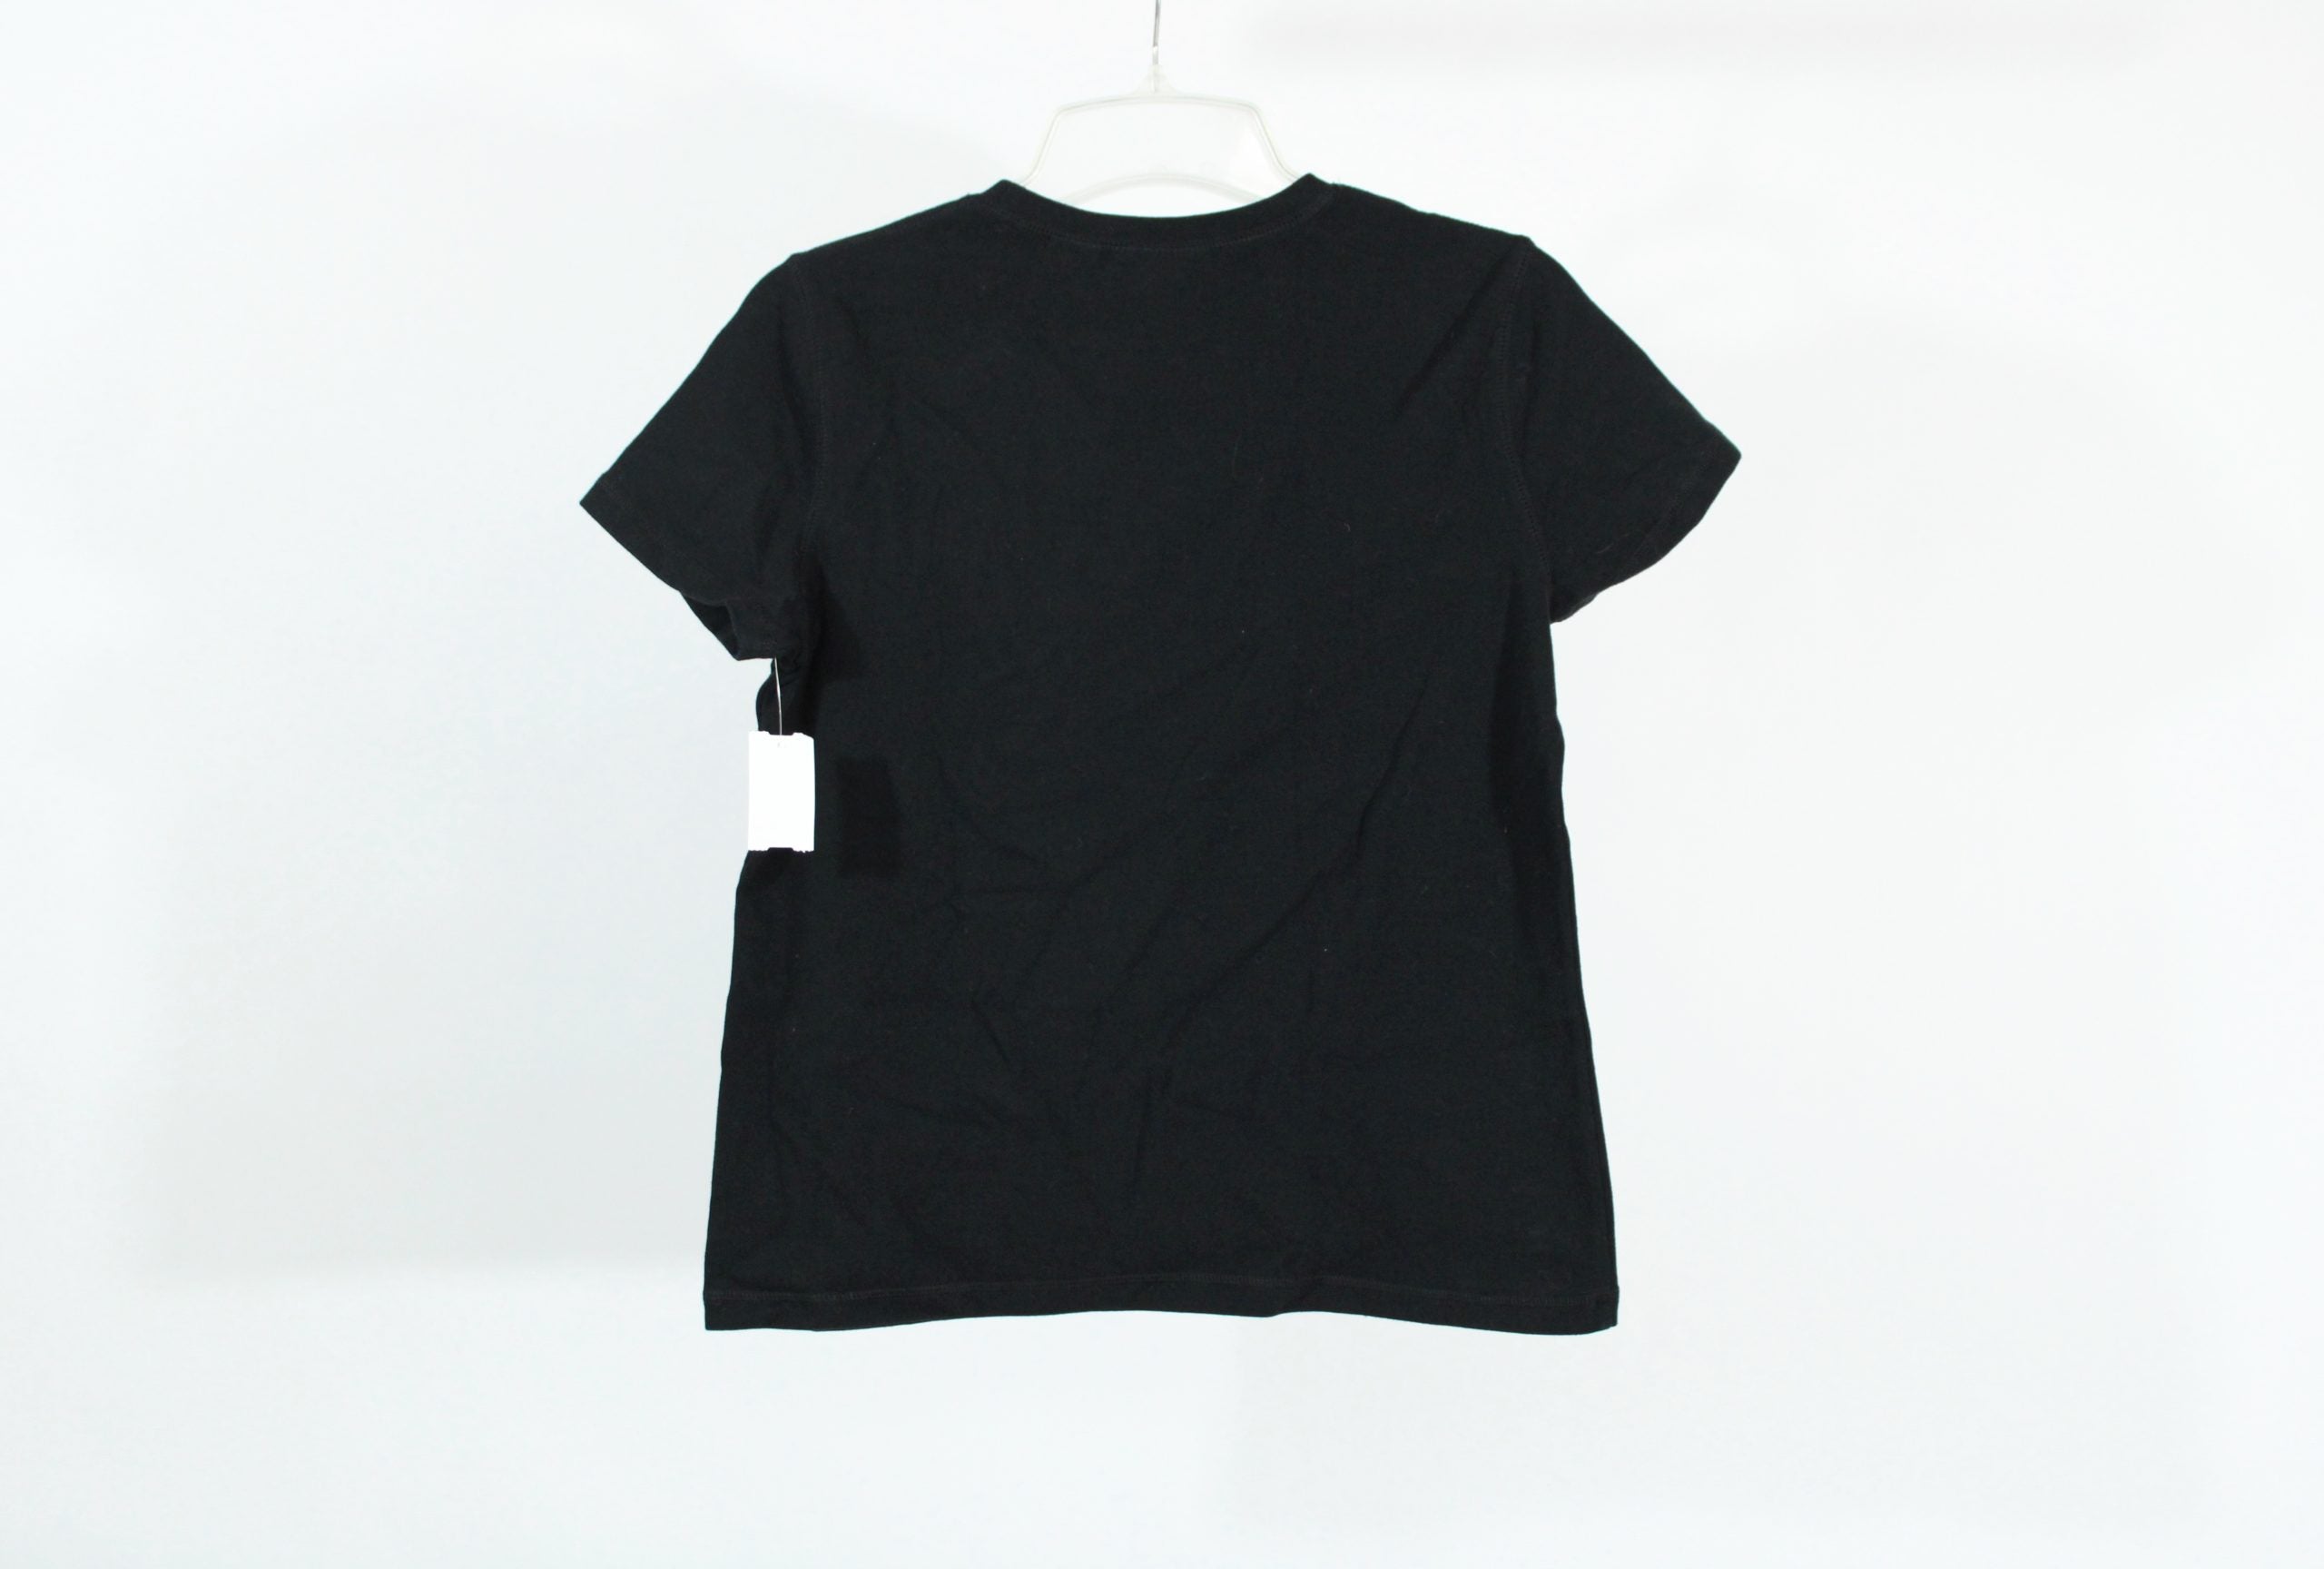 Relativity Black Shirt | Size M